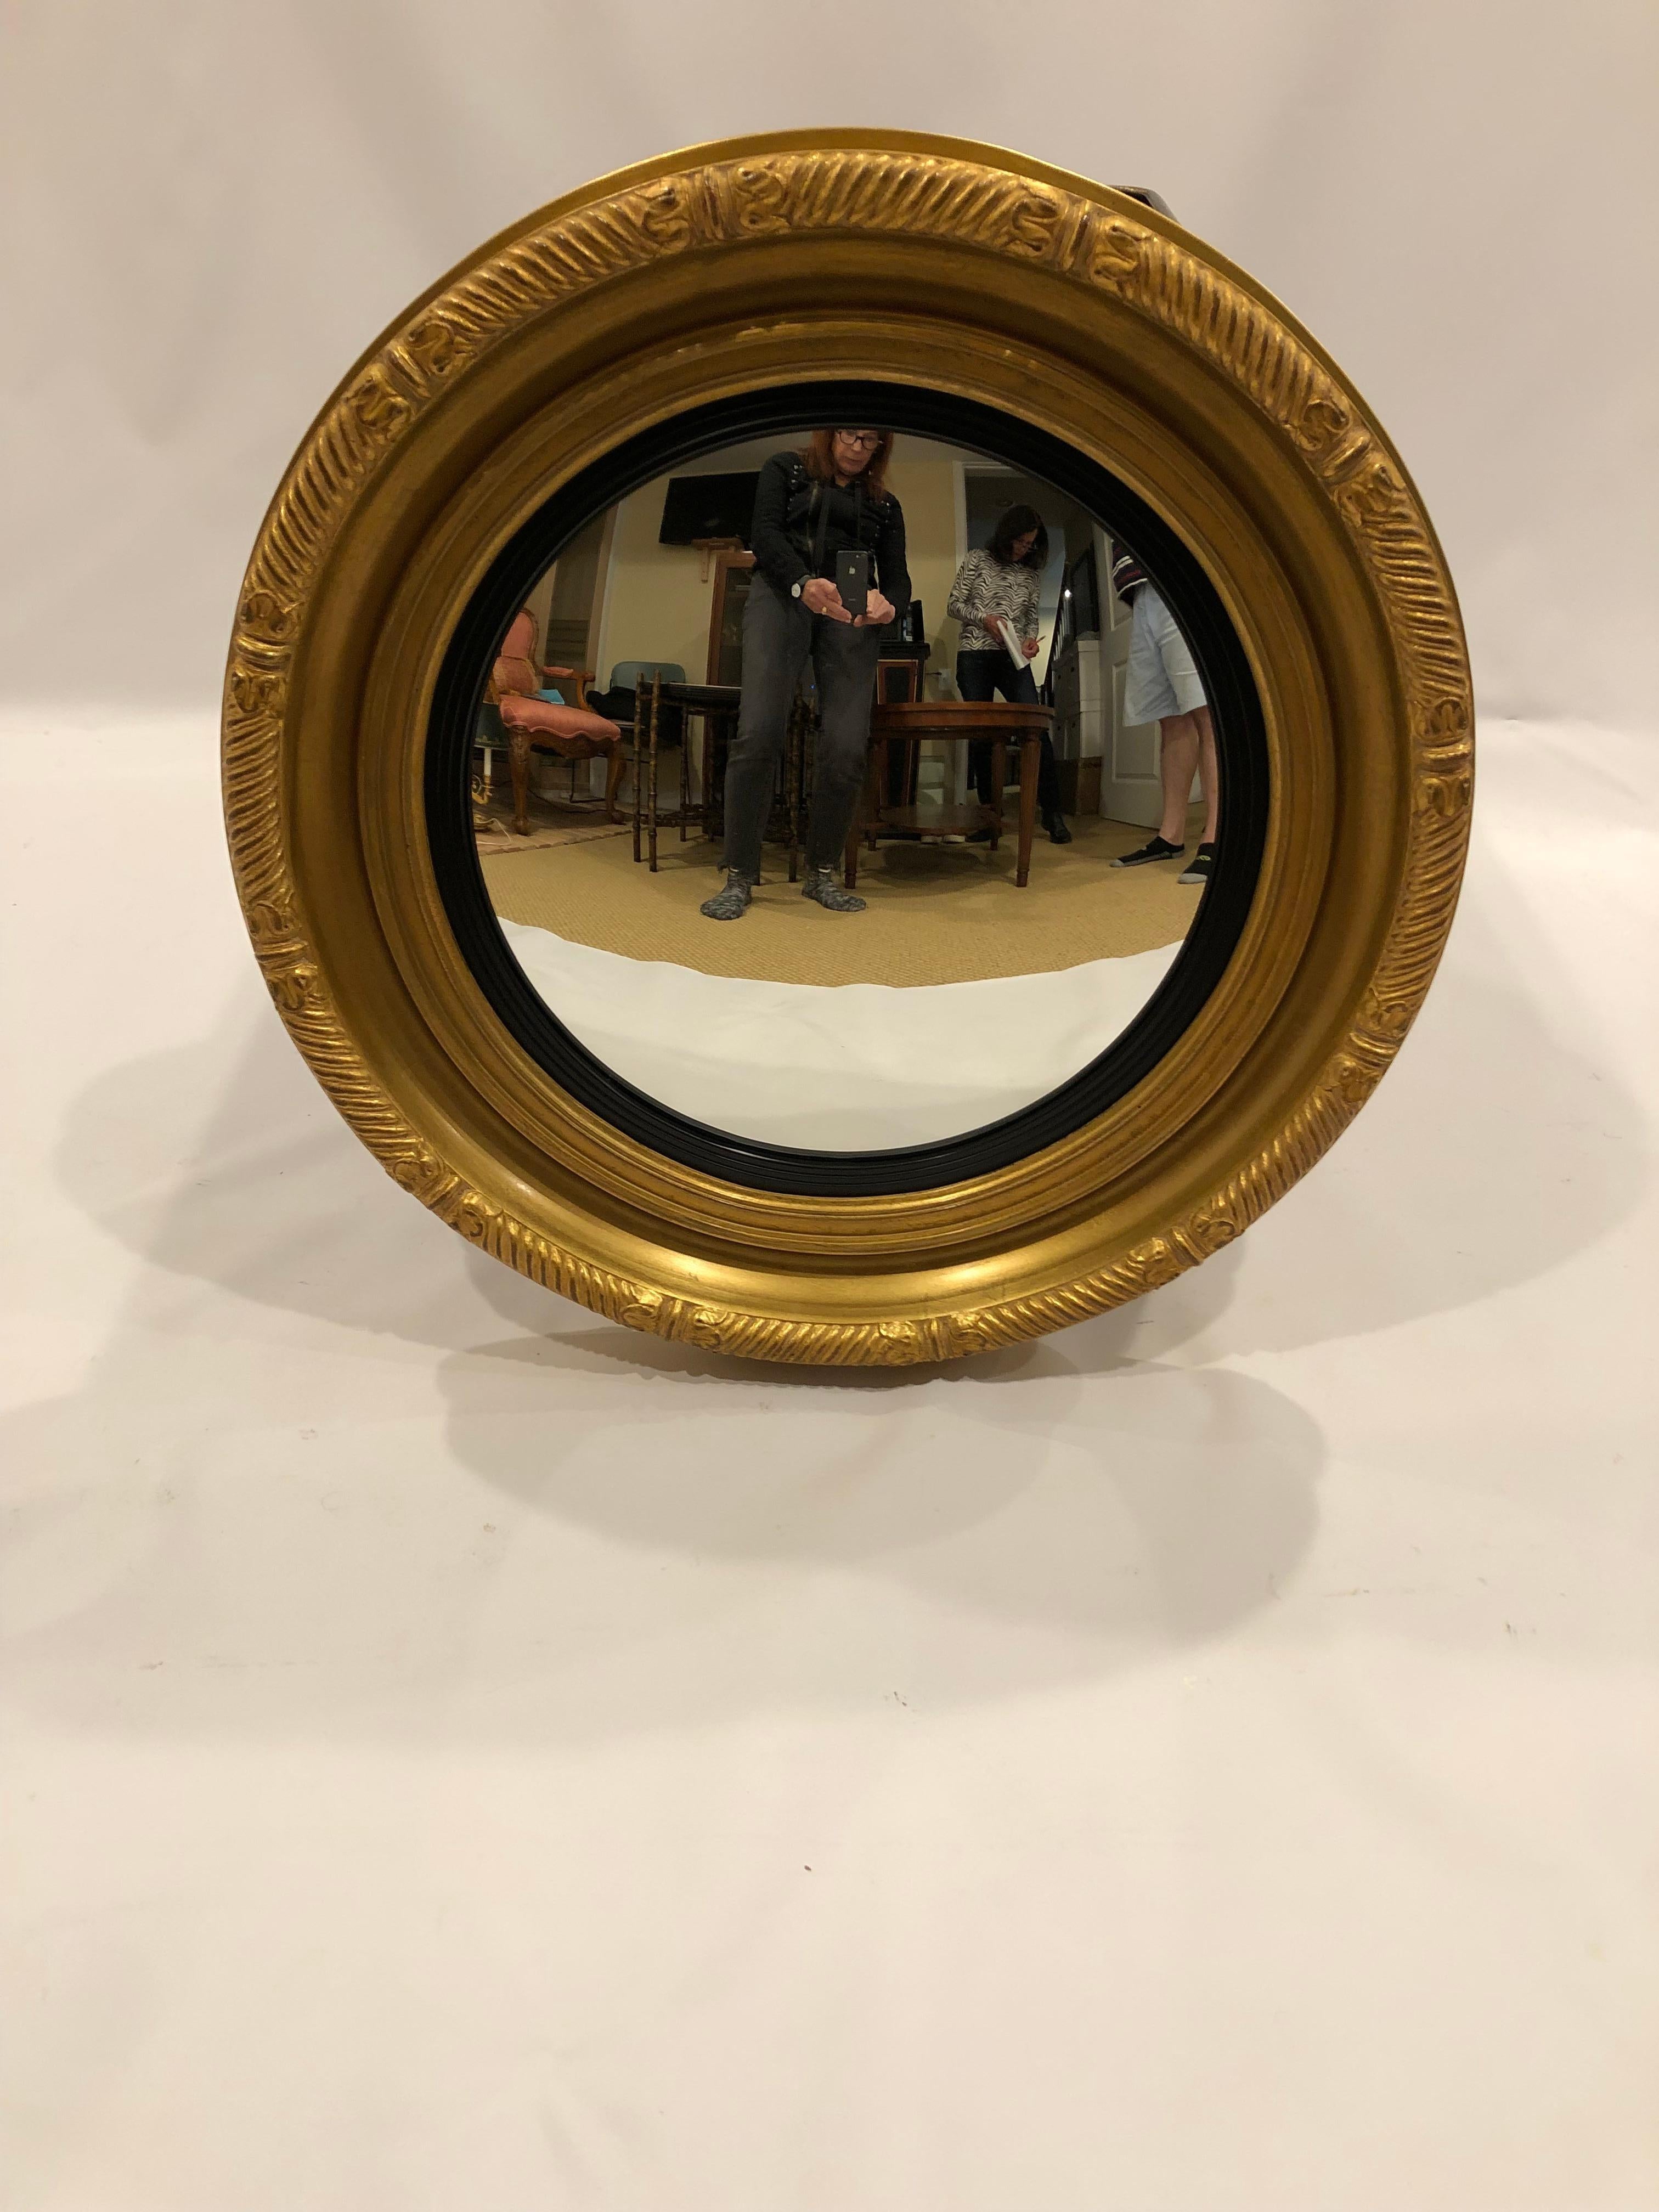 Handsome Round Convex Gilded Regency Style Bullseye Mirror 1